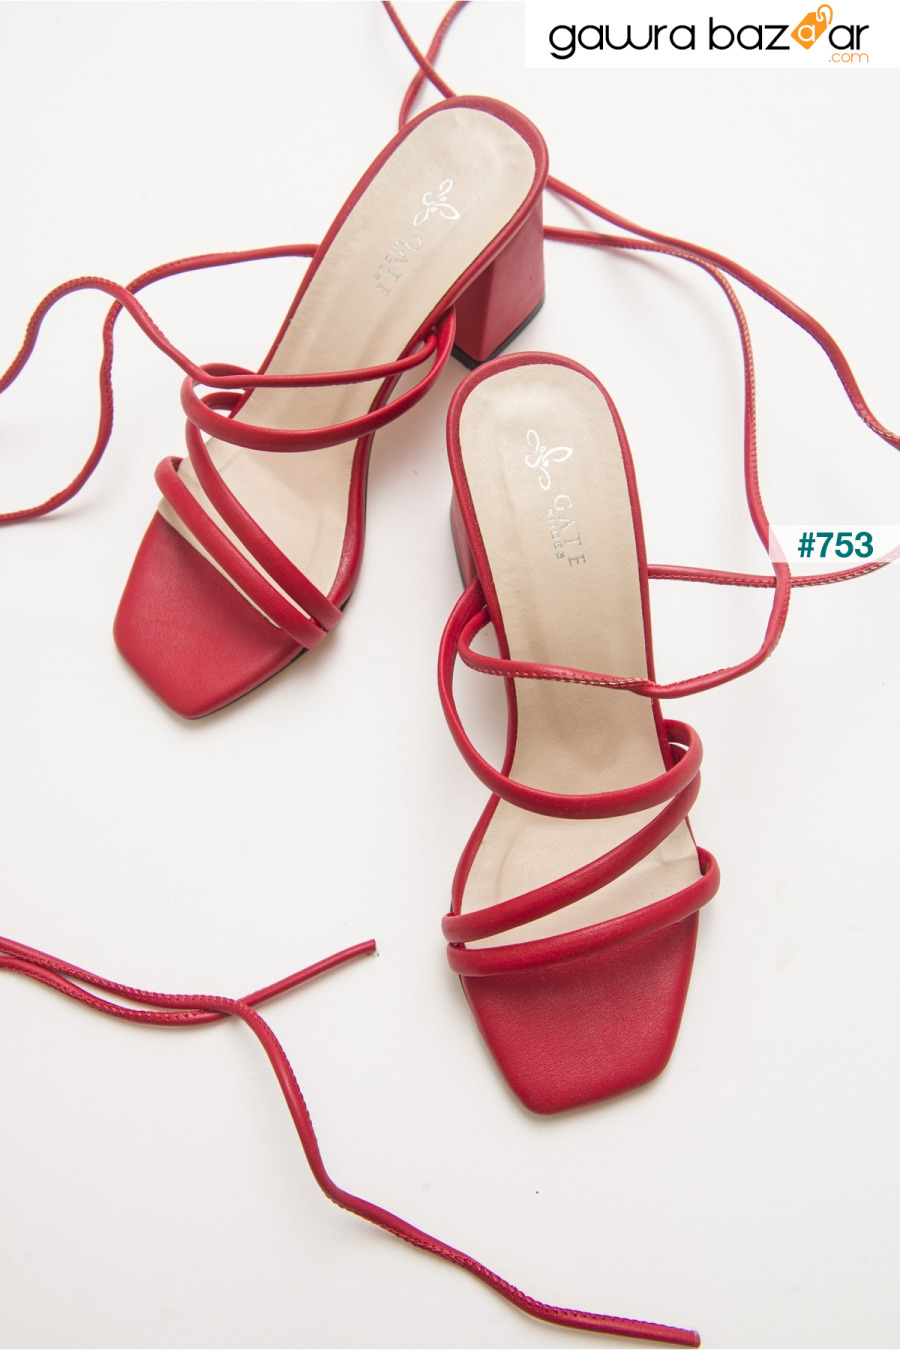 29 حذاء نسائي من Carisa ذو كعب سميك يوميًا يرتدي الكاحل Gate 3